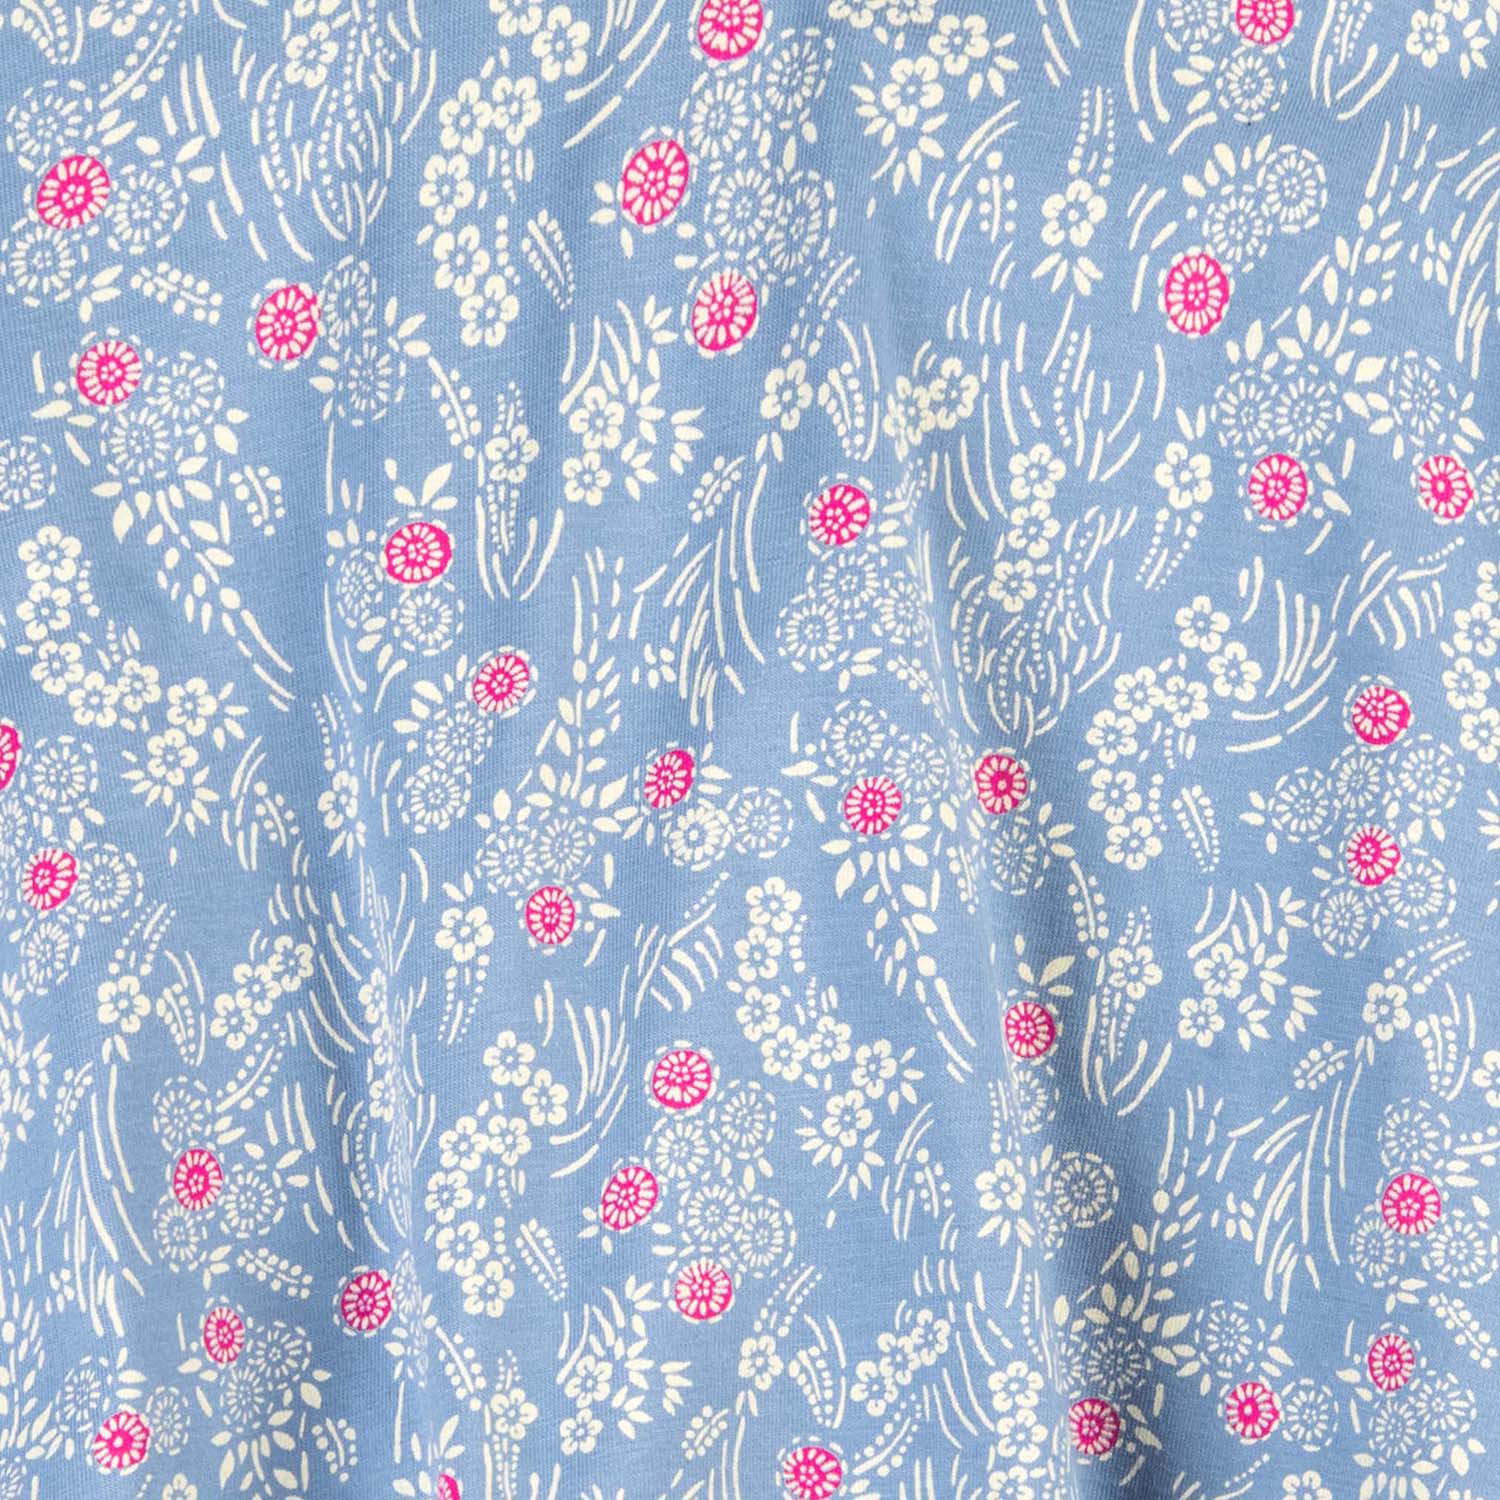 Women's Midi/Maxi Whisper Dress in Cherry Blossom